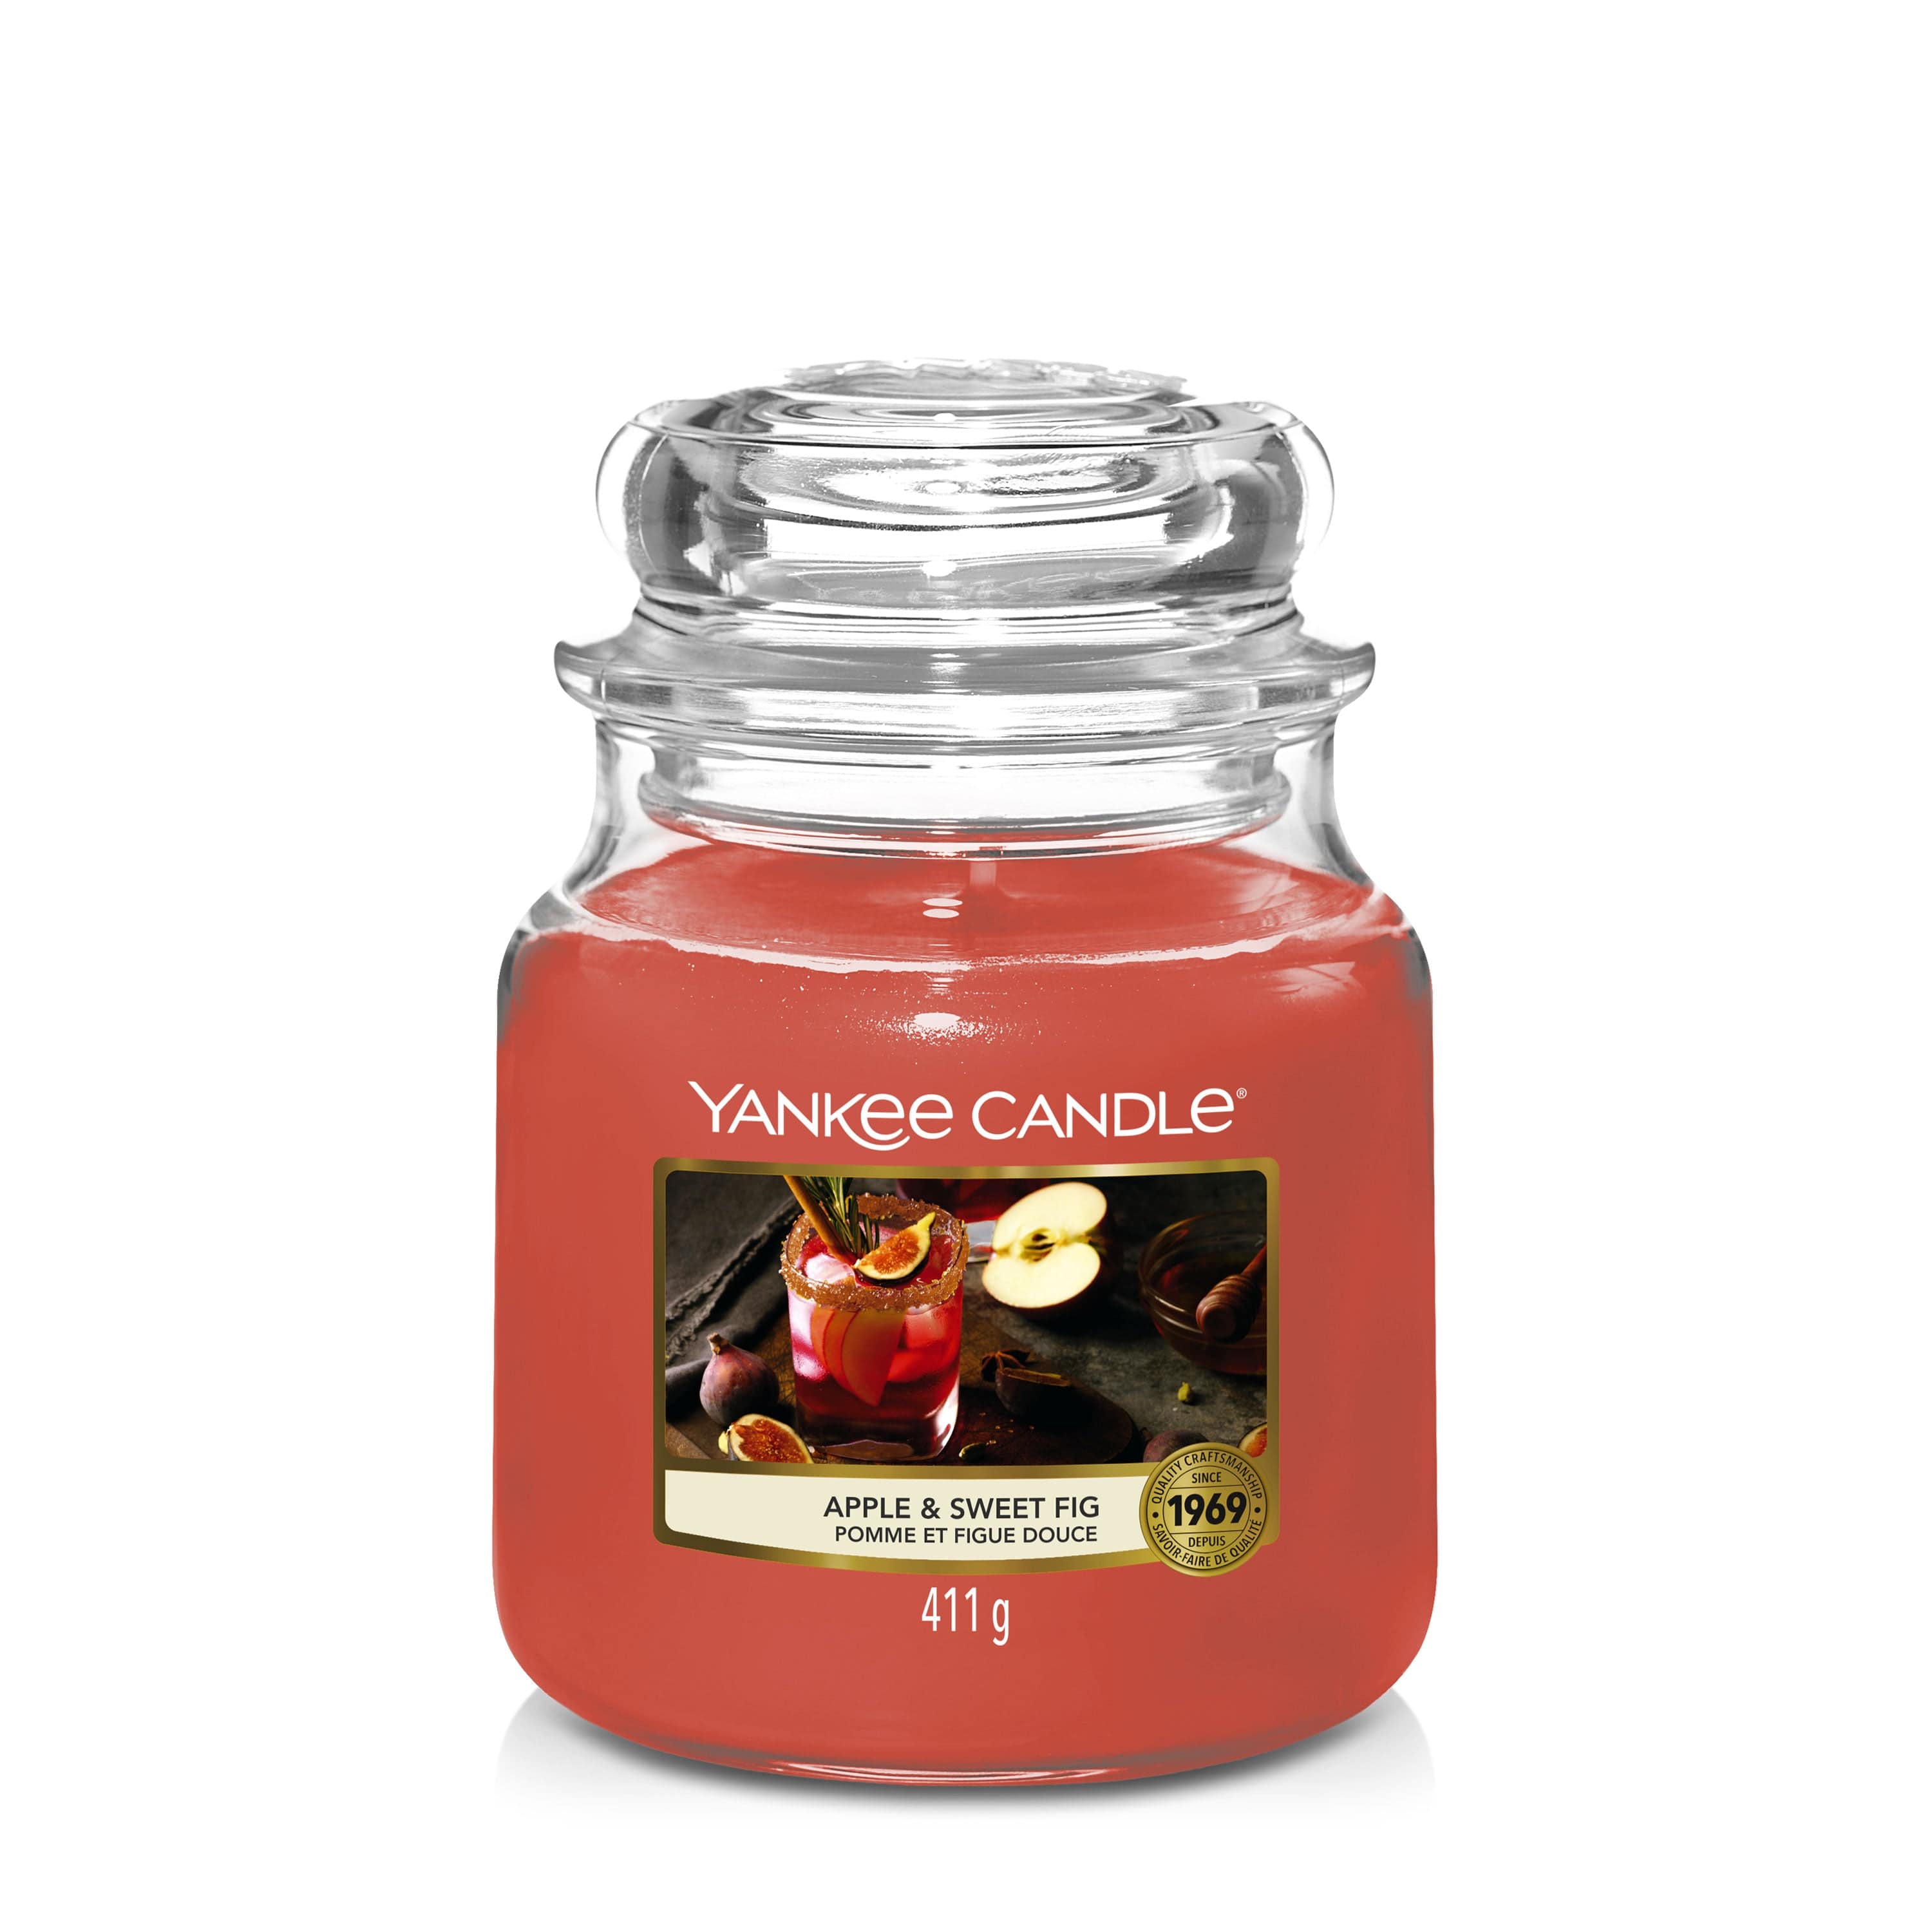 Yankee Candle Medium Jar Candle Yankee Candle Medium Jar - Apple & Sweet Fig